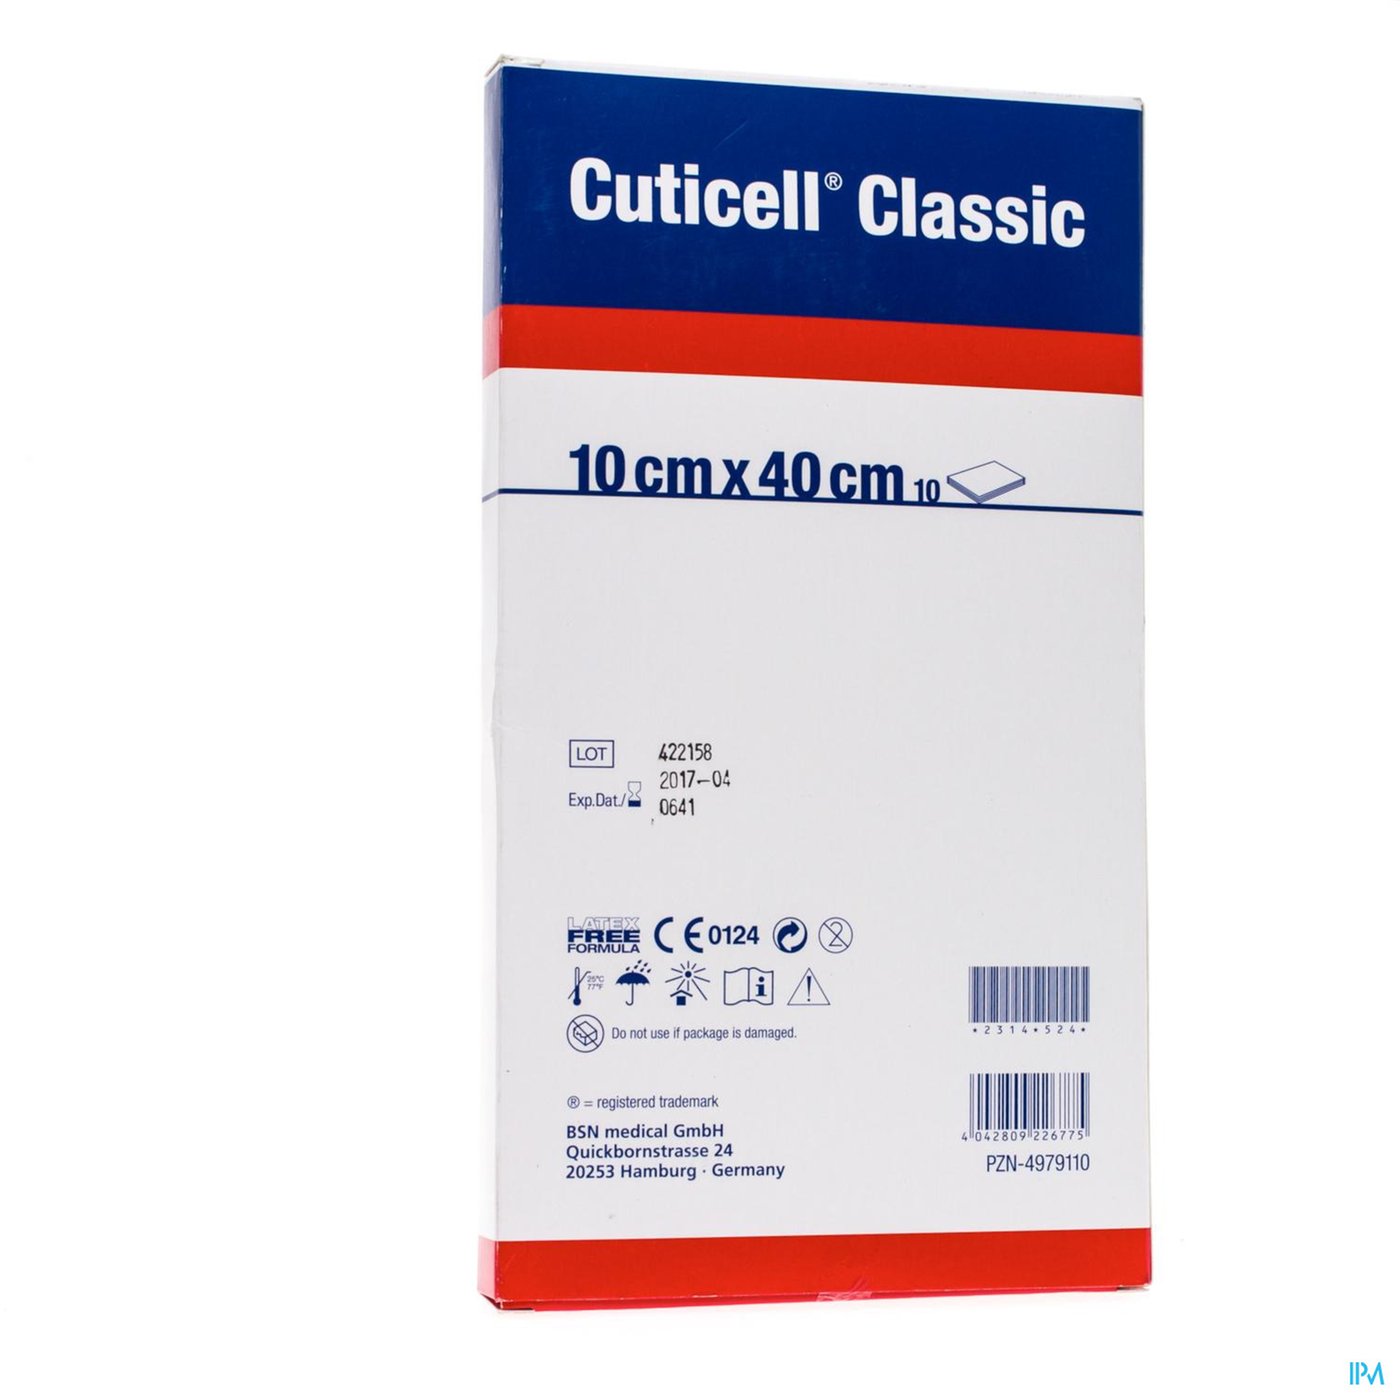 Cuticell Classic Gaaskompres 10,0x40cm 10 7253804 packshot